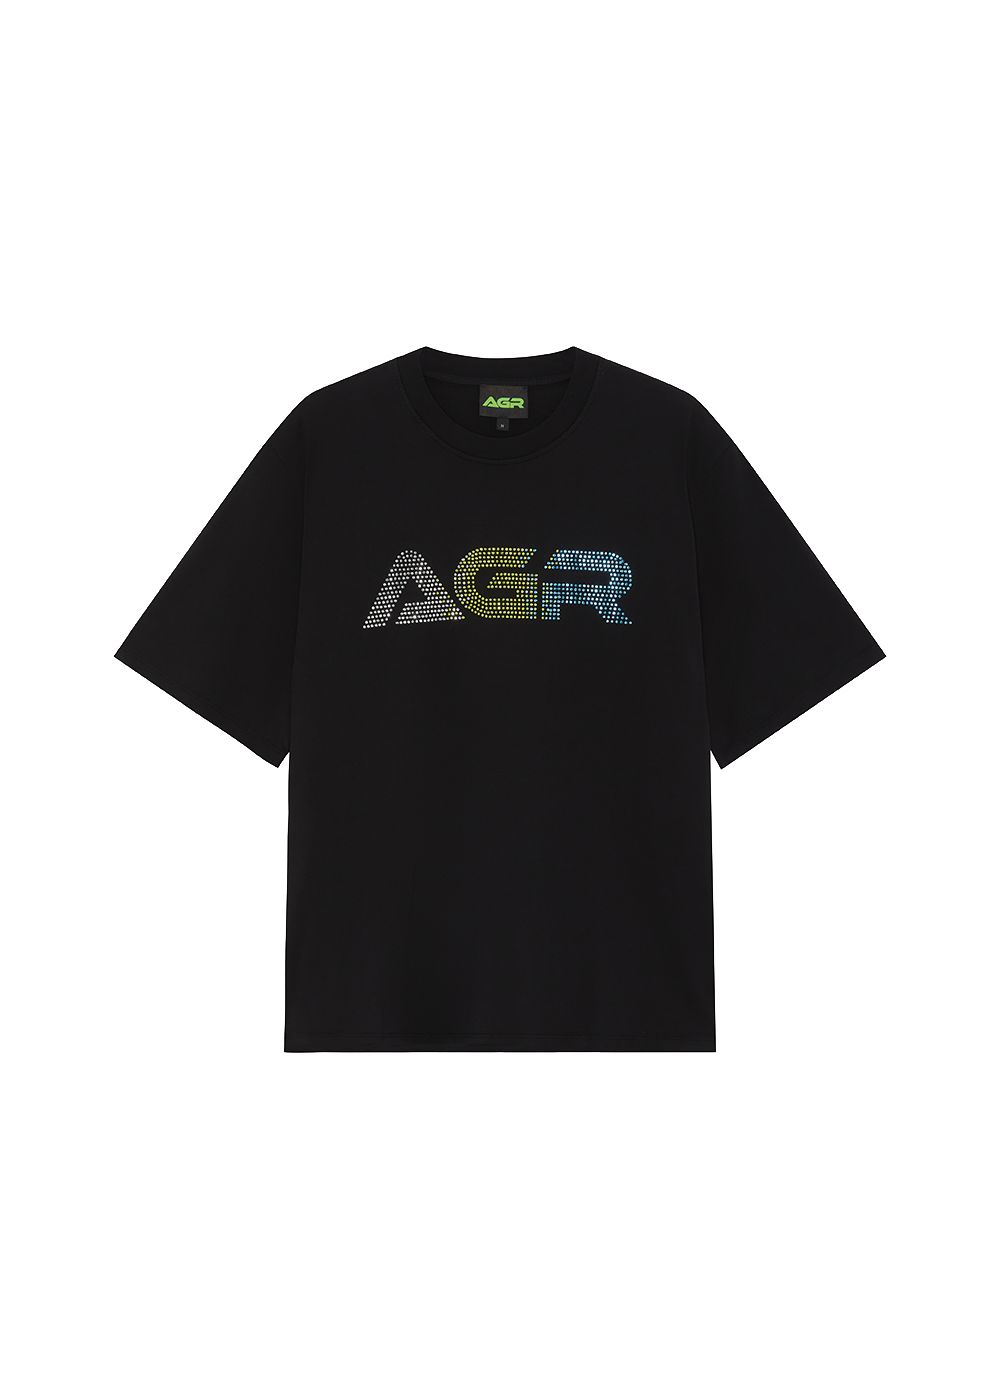 AGR - Diamante T-shirt - Packshot - Front